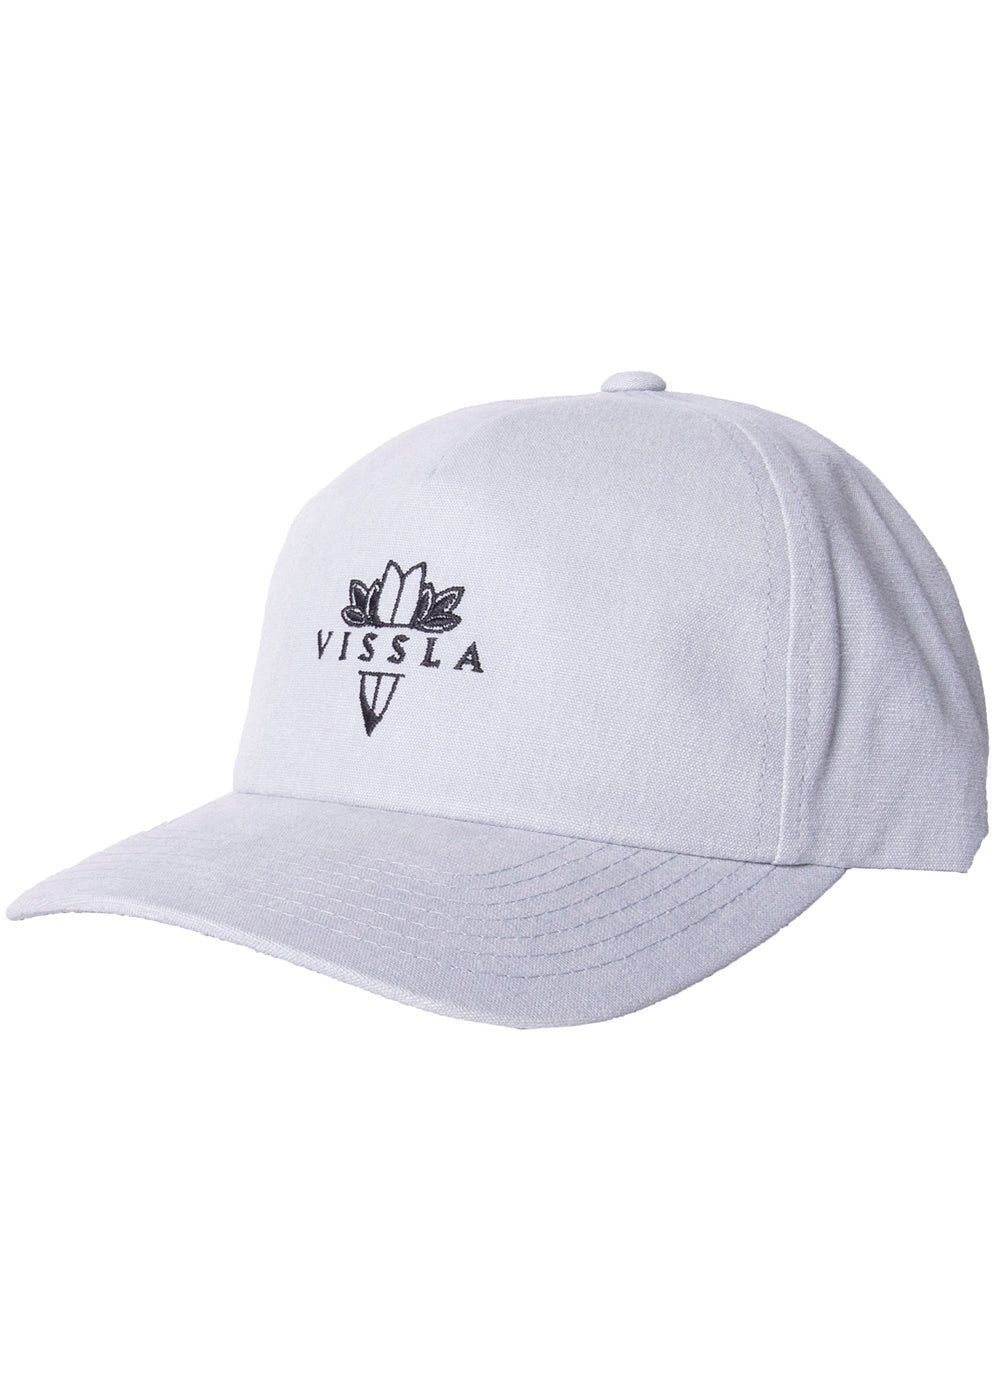 Vissla Steel Dagger Hat Front View 